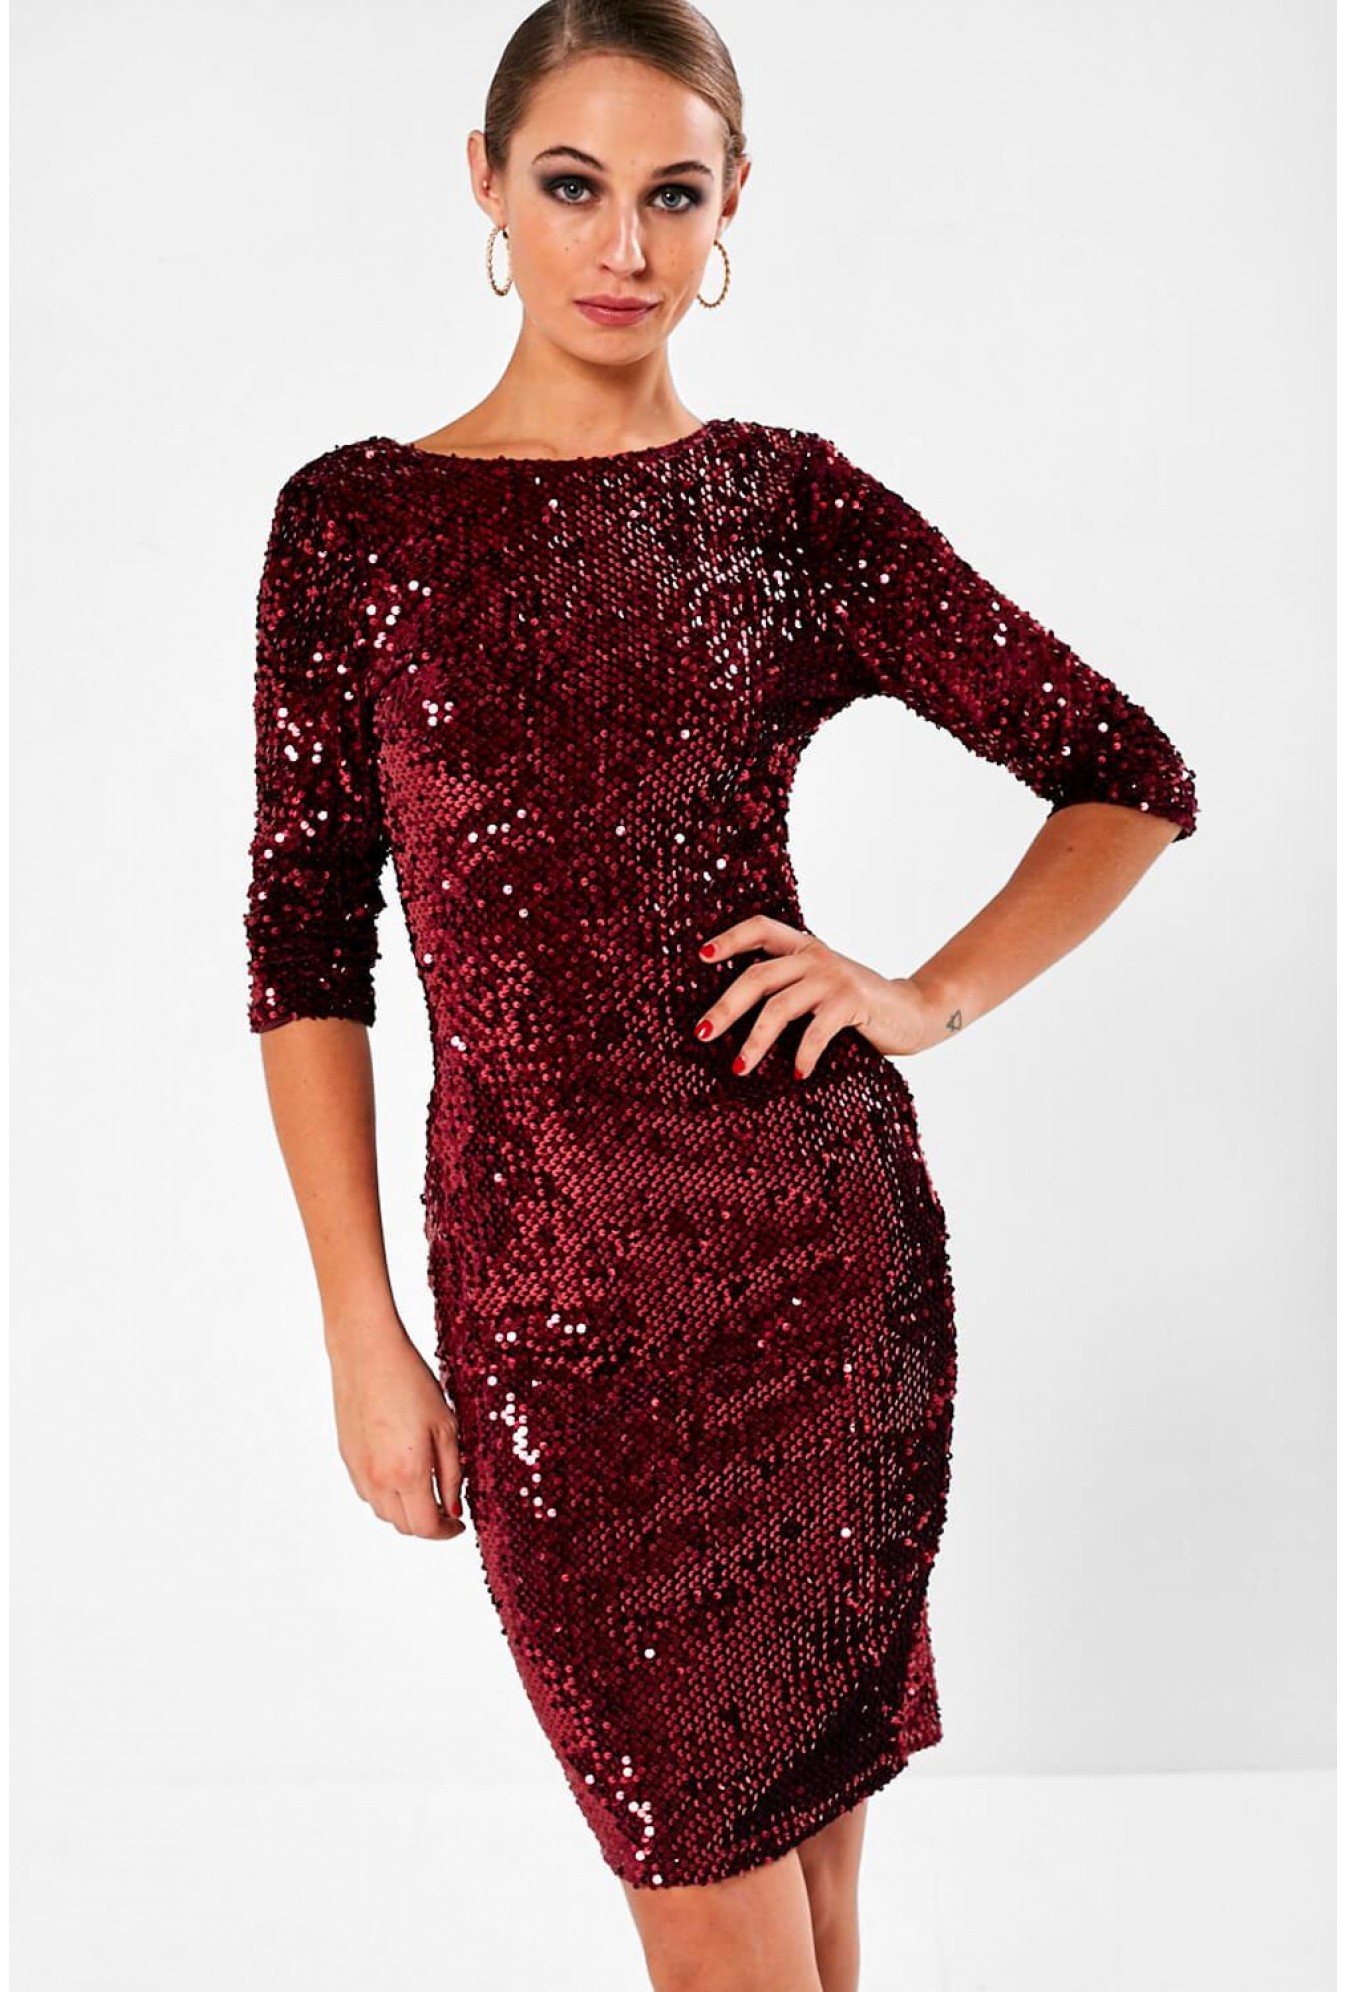 wine color sequin dress